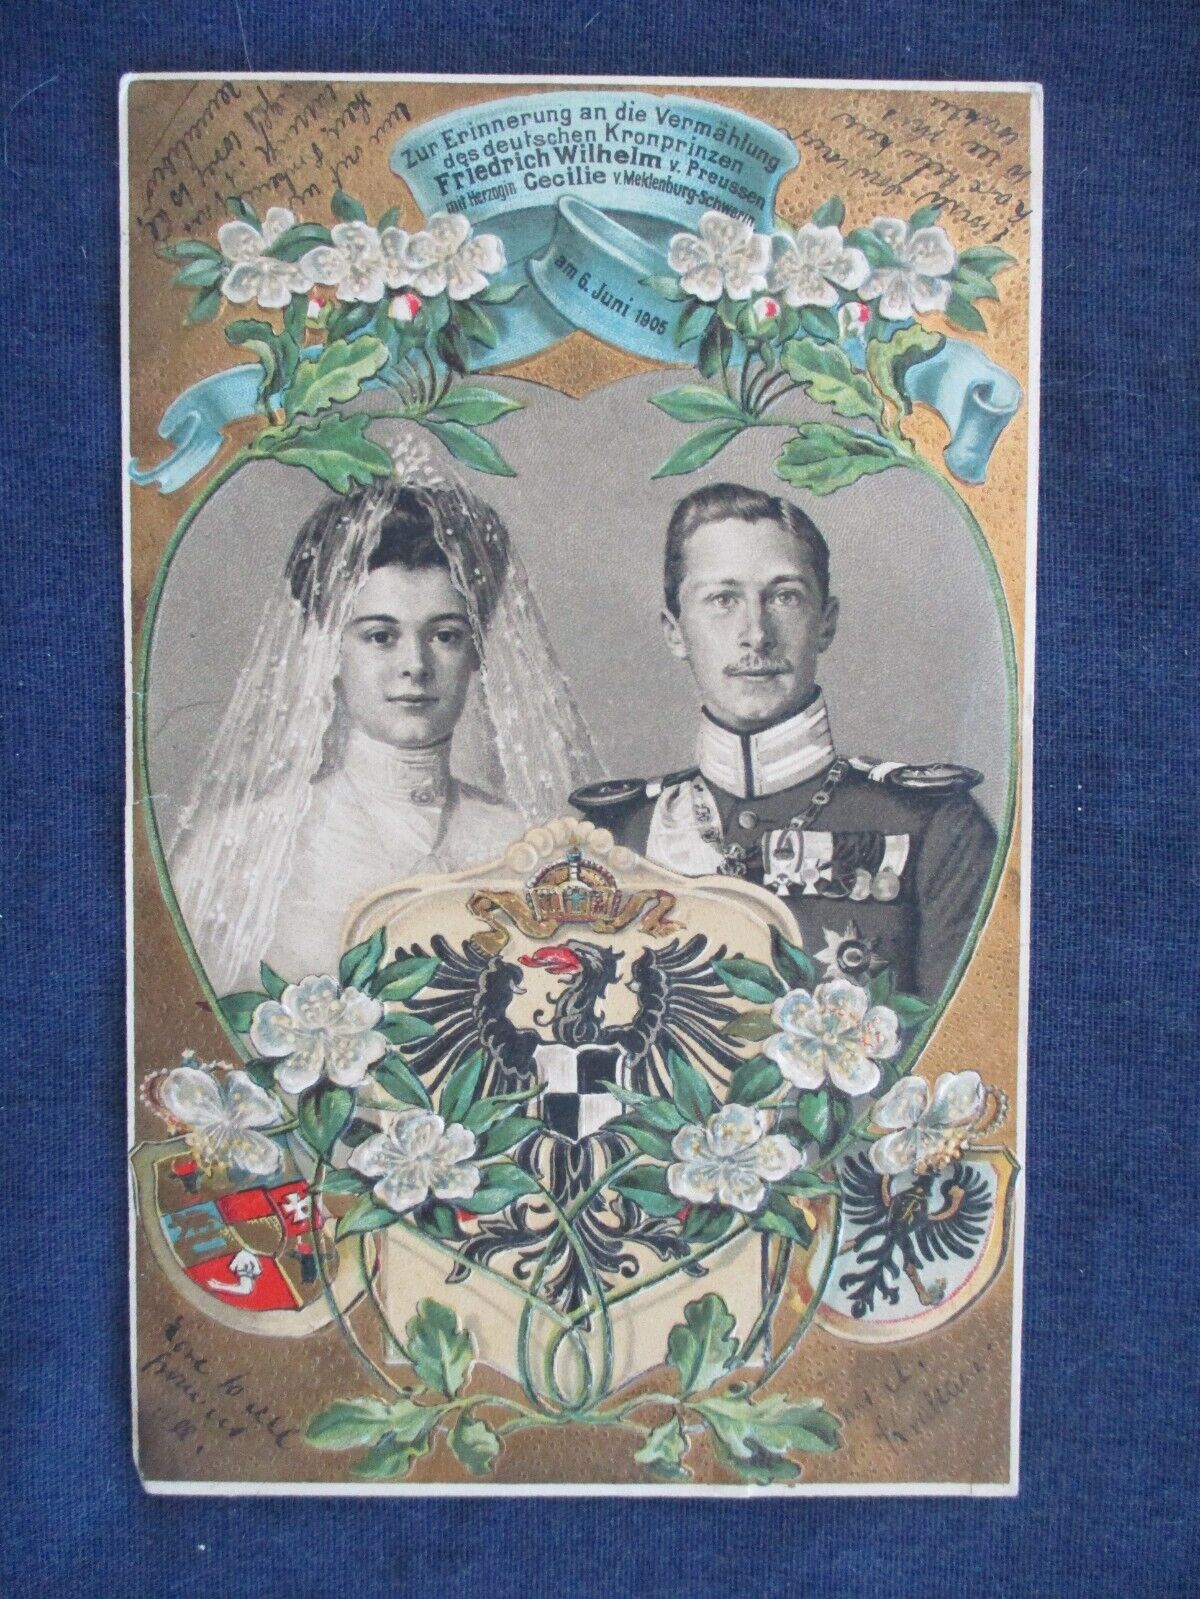 1905 Friedrich Wilhelm Wedding Royalty Postcard Berlin Cancel Used to US